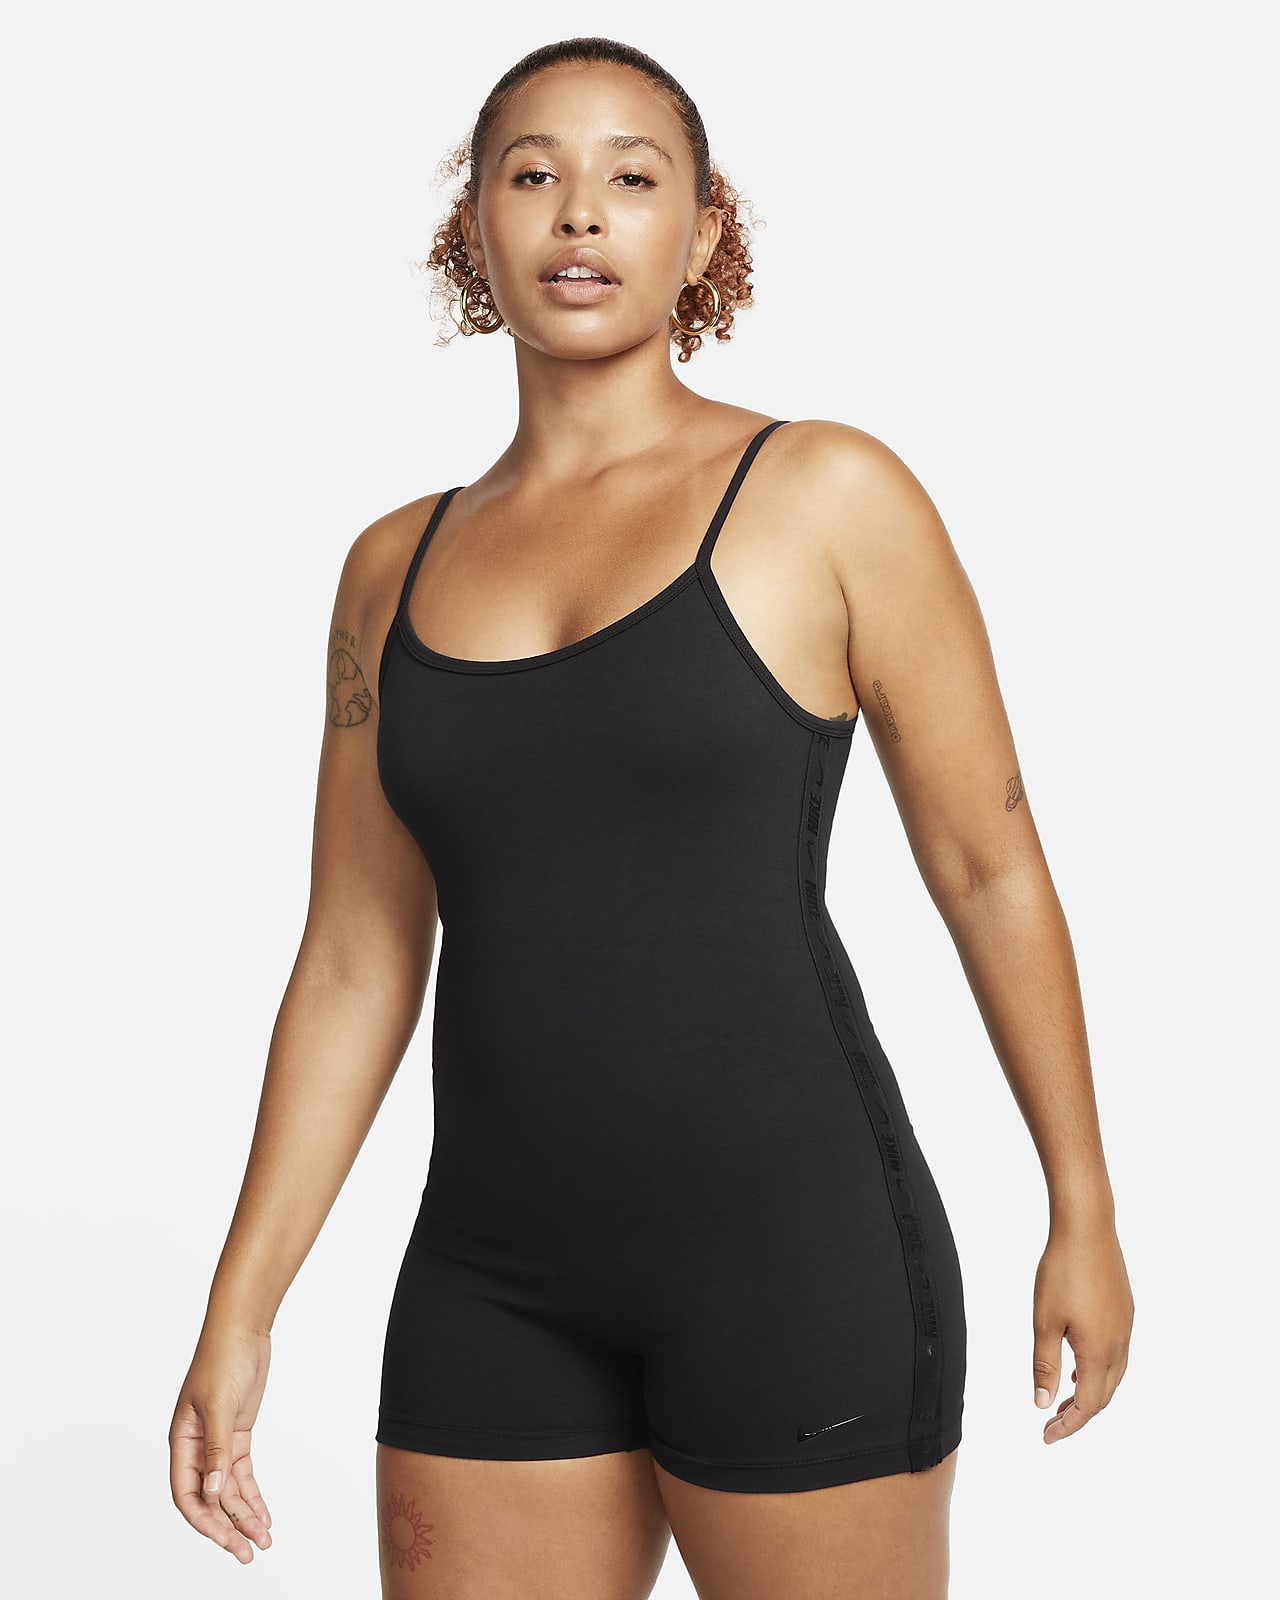 Women's Bodysuits. Nike UK